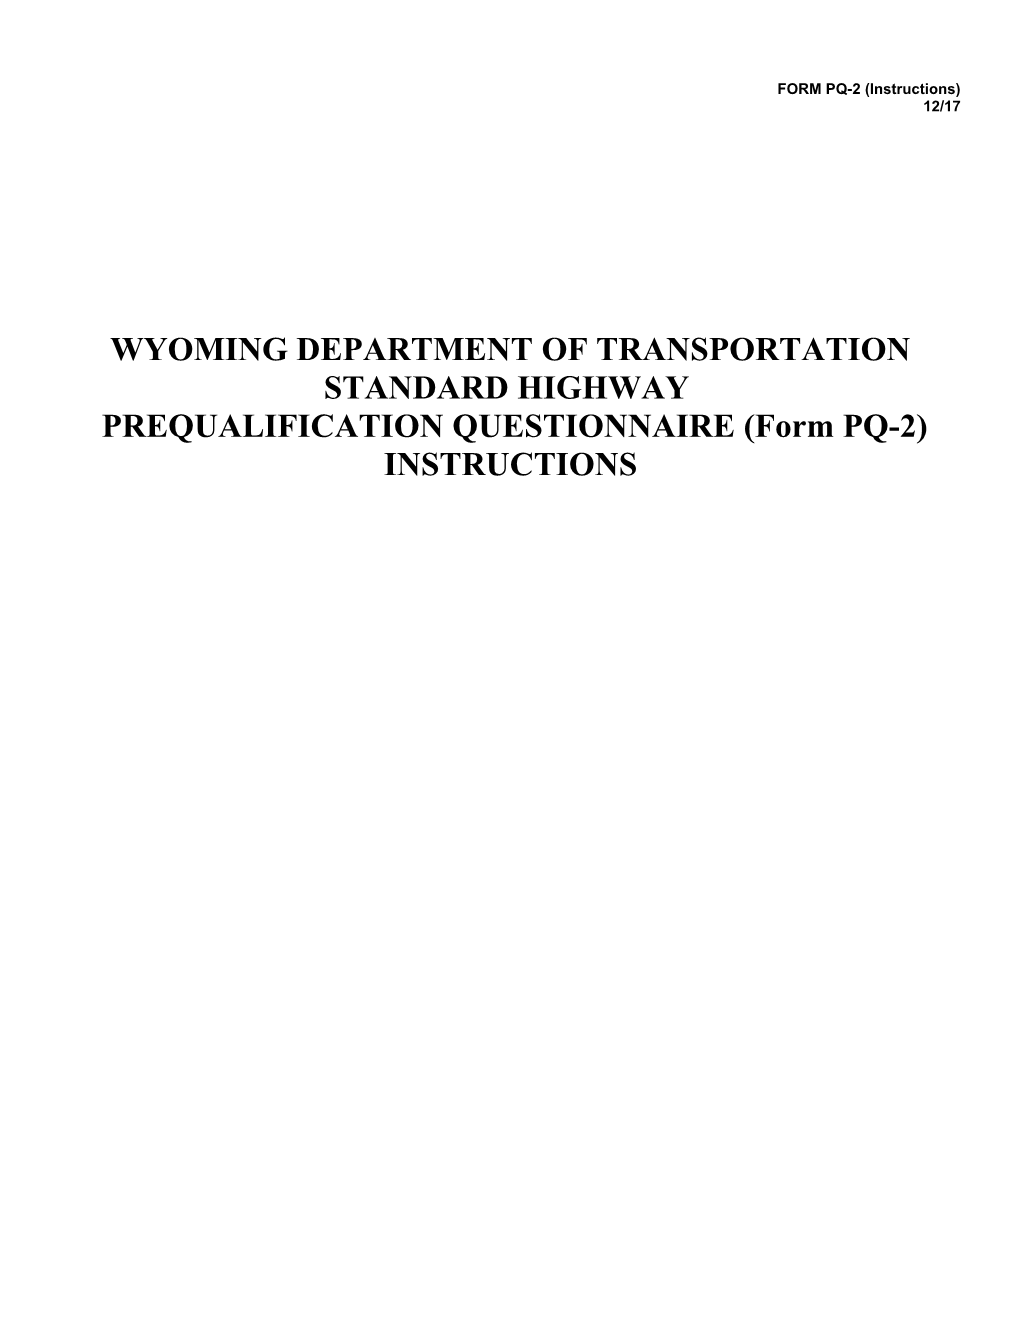 Wyoming Department of Transportationstandard Highway